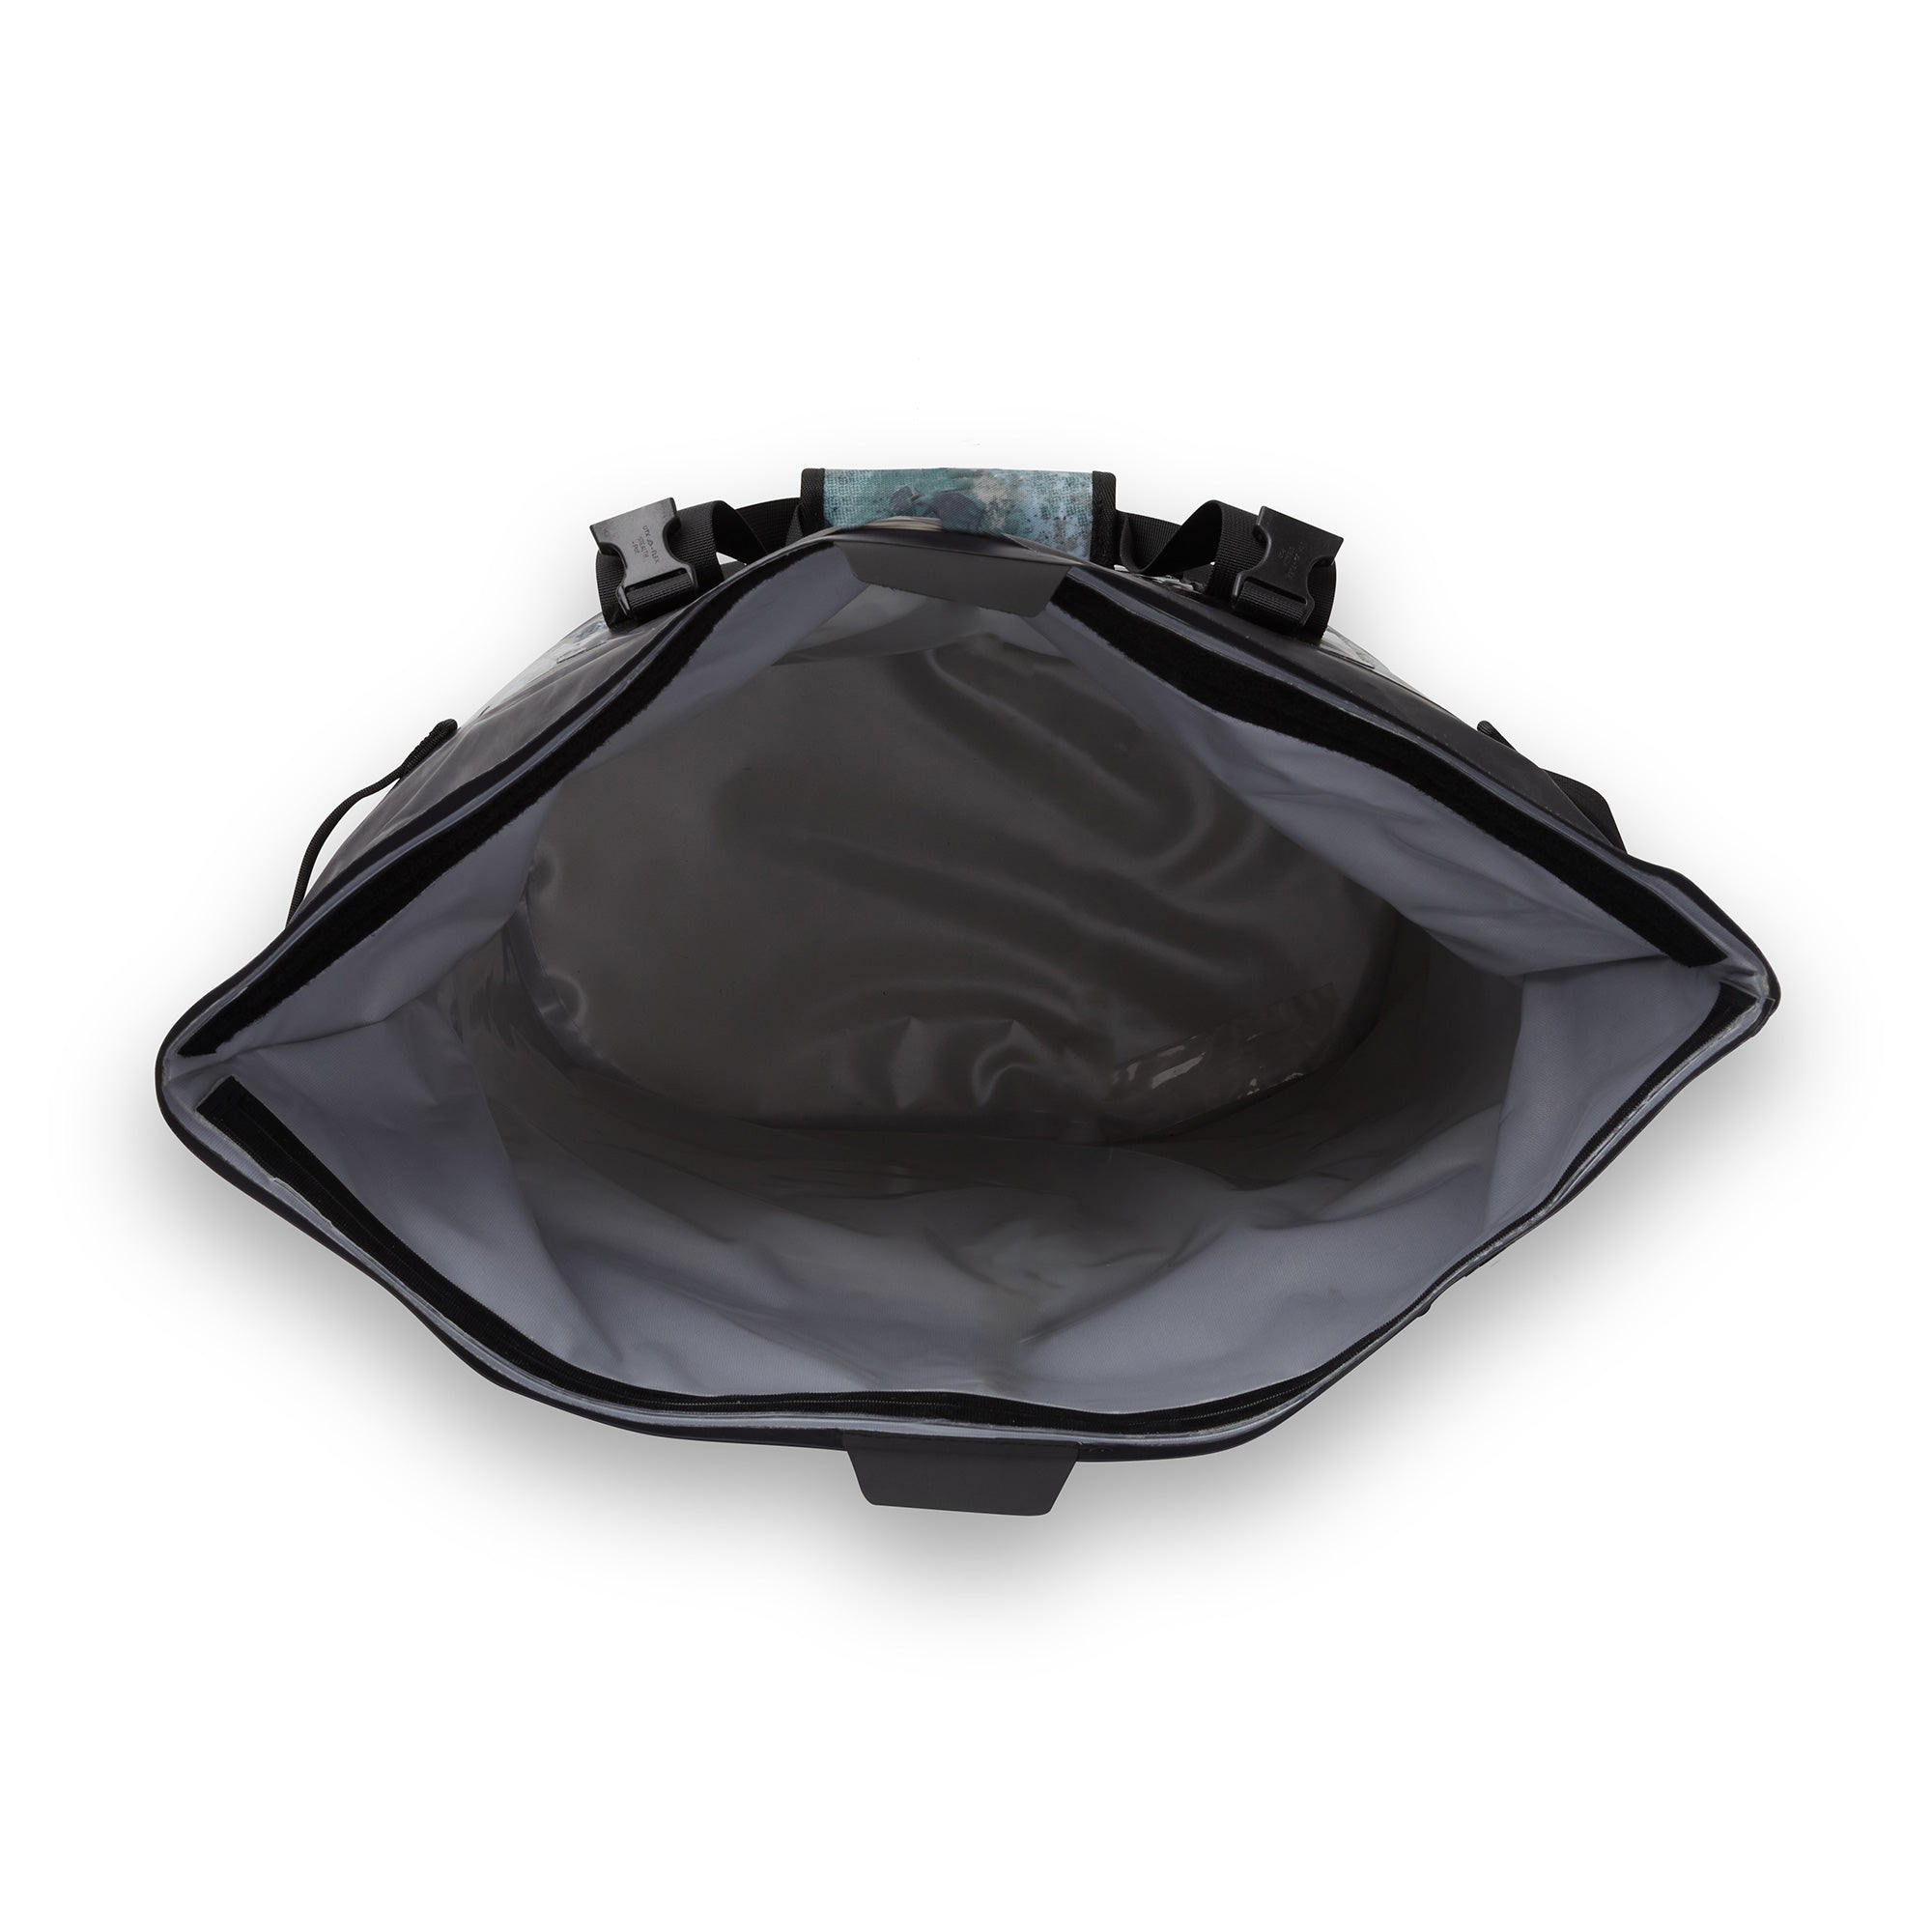 MATEIN Leakproof Soft Cooler Backpack